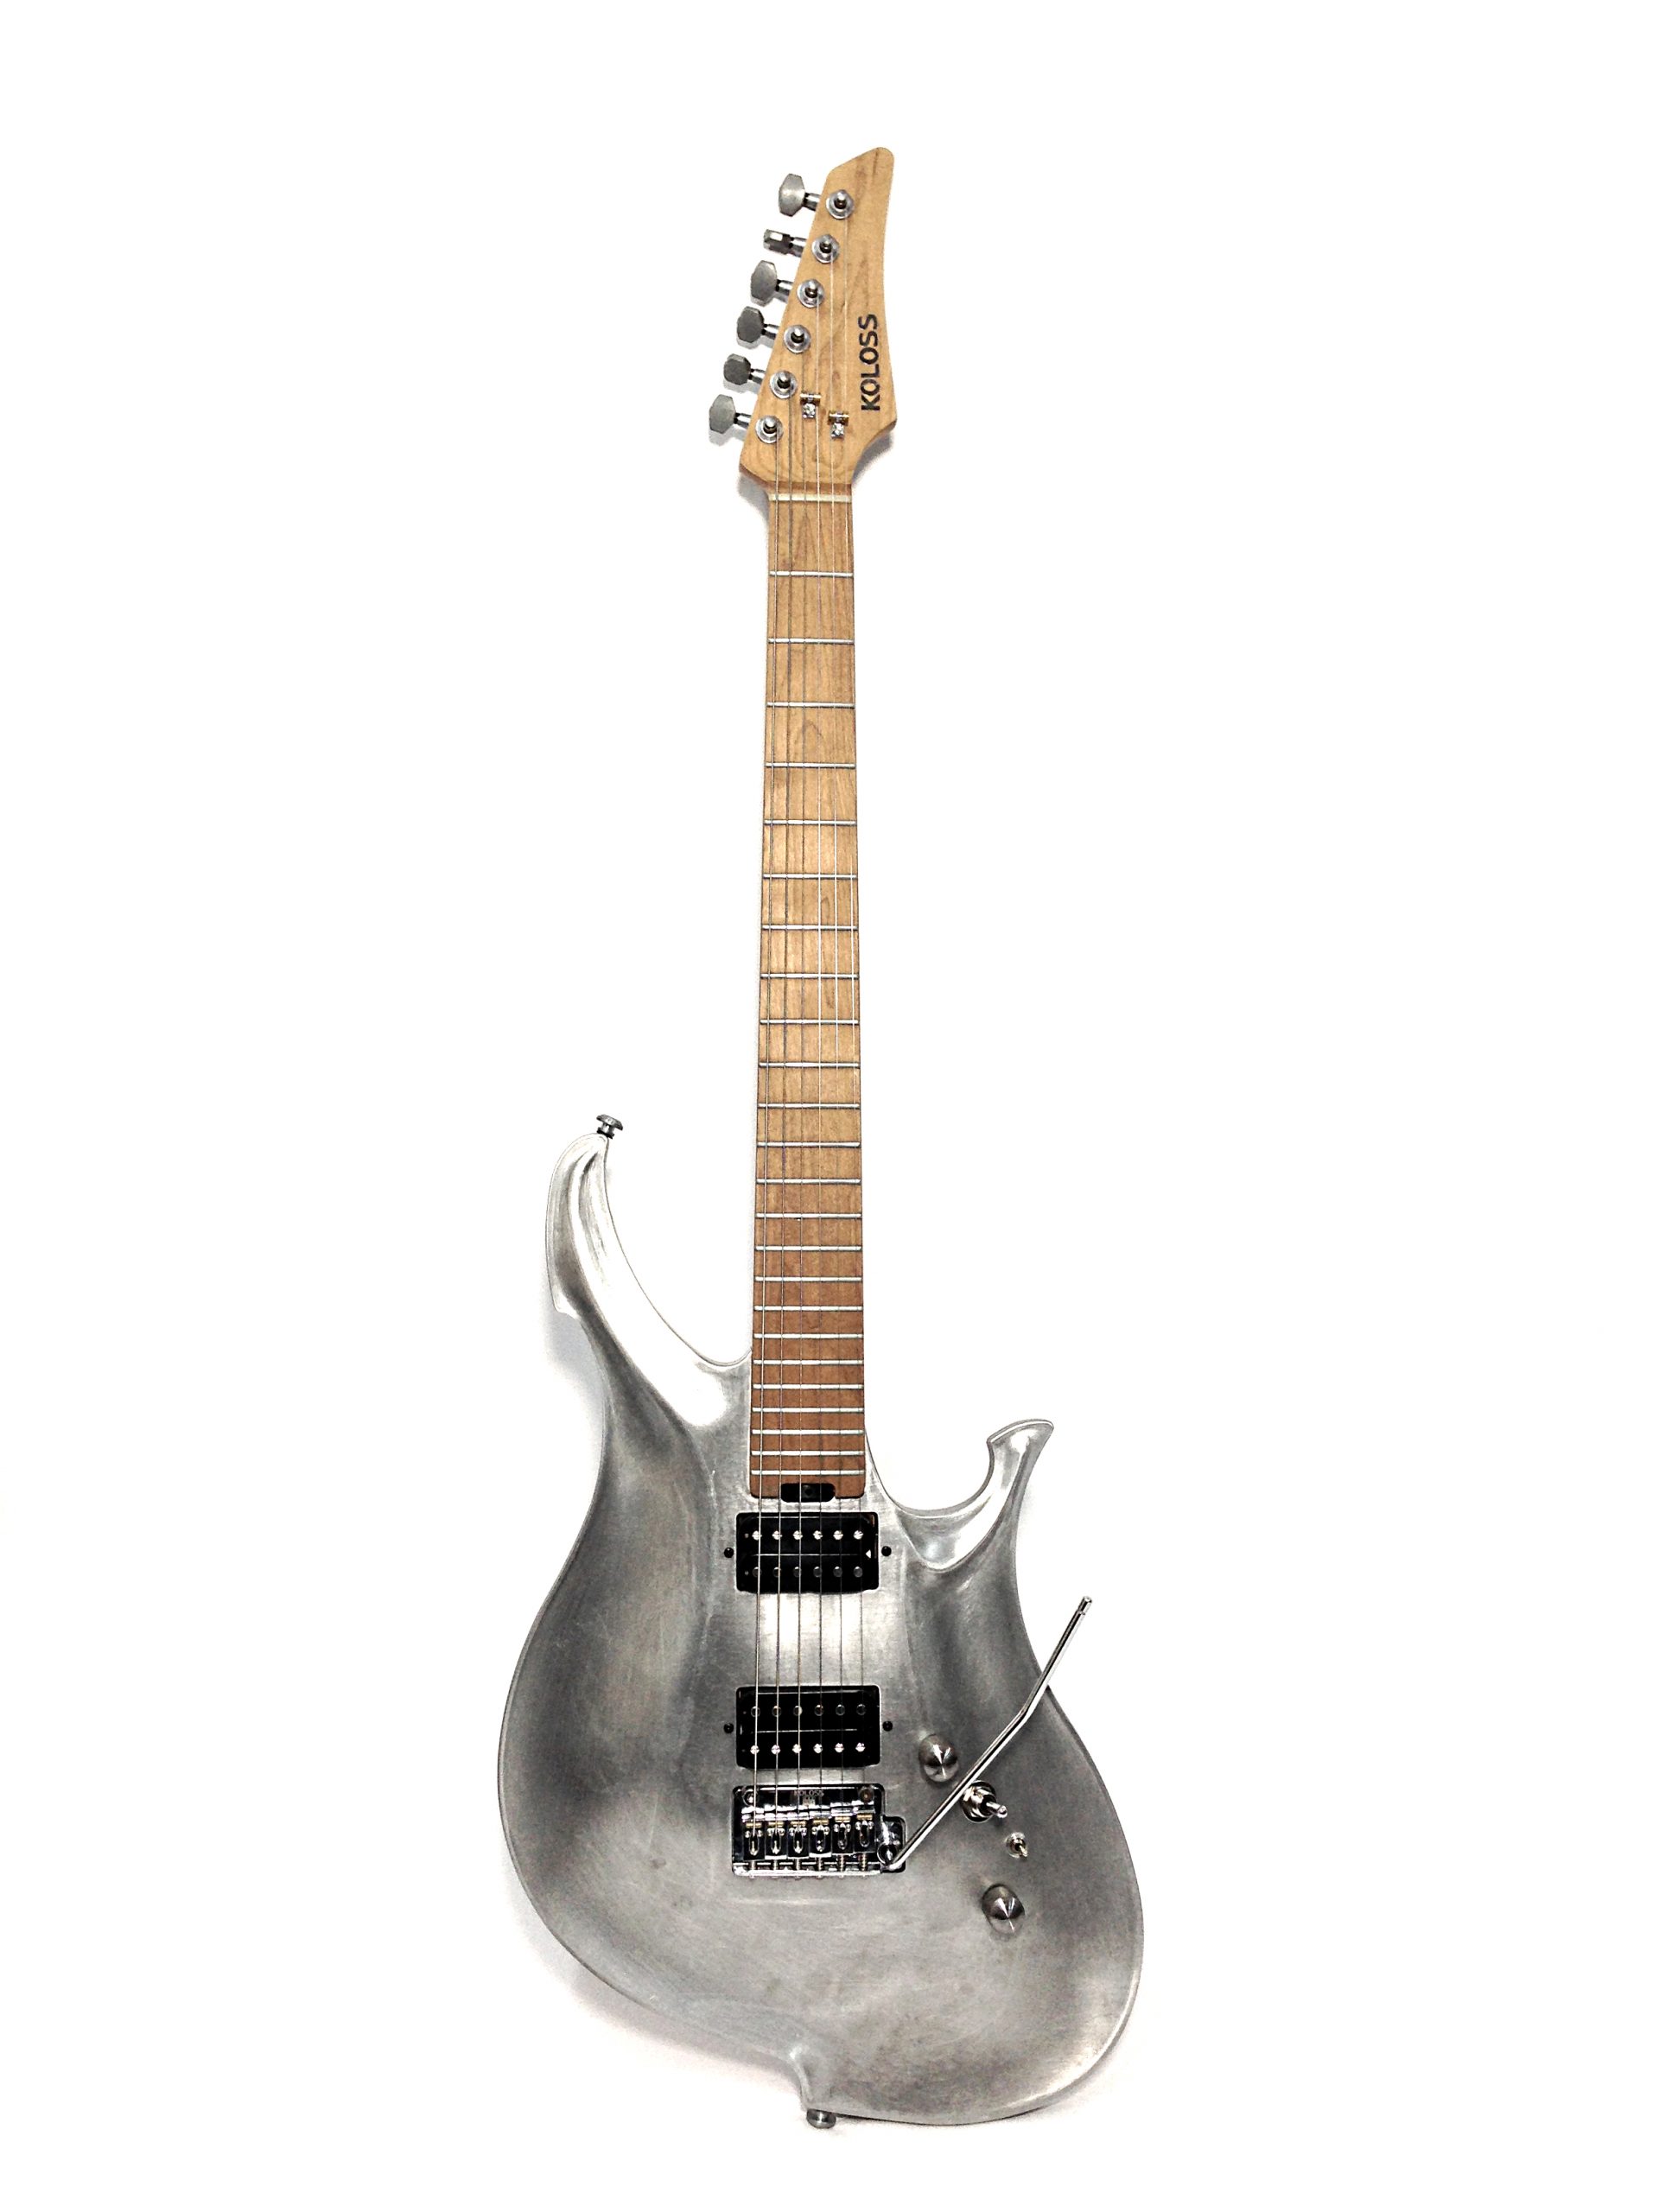 KOLOSS GT-45P NA Aluminum body Roasted maple neck electric guitar